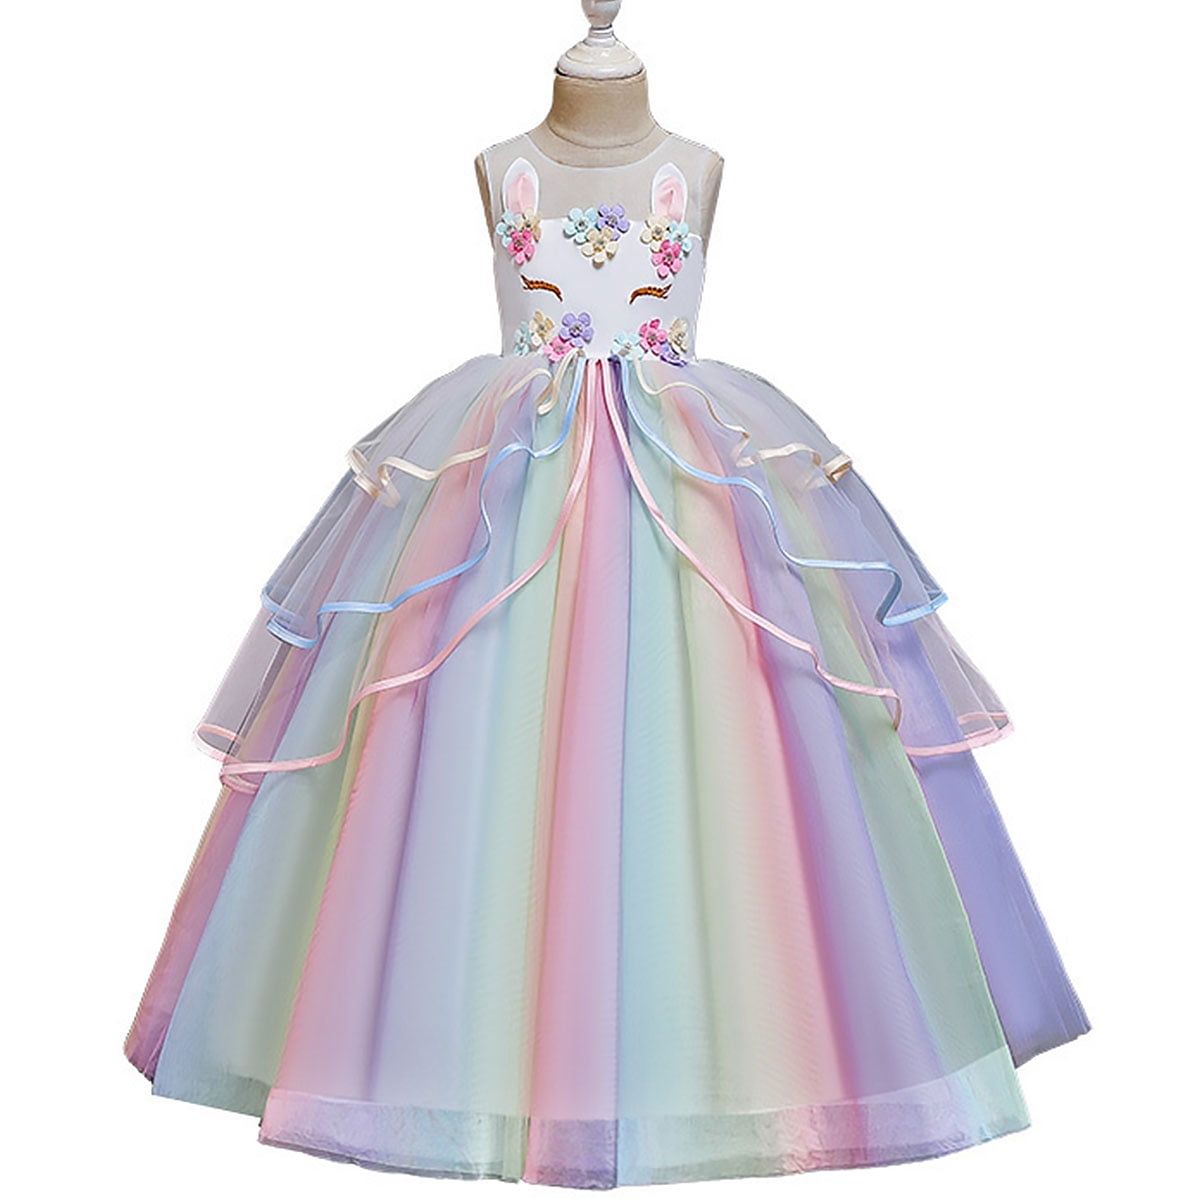 Fiream Rainbow Unicorn Dresses for Girls Tulle Dress Long Sleeve 2-10 Years Old